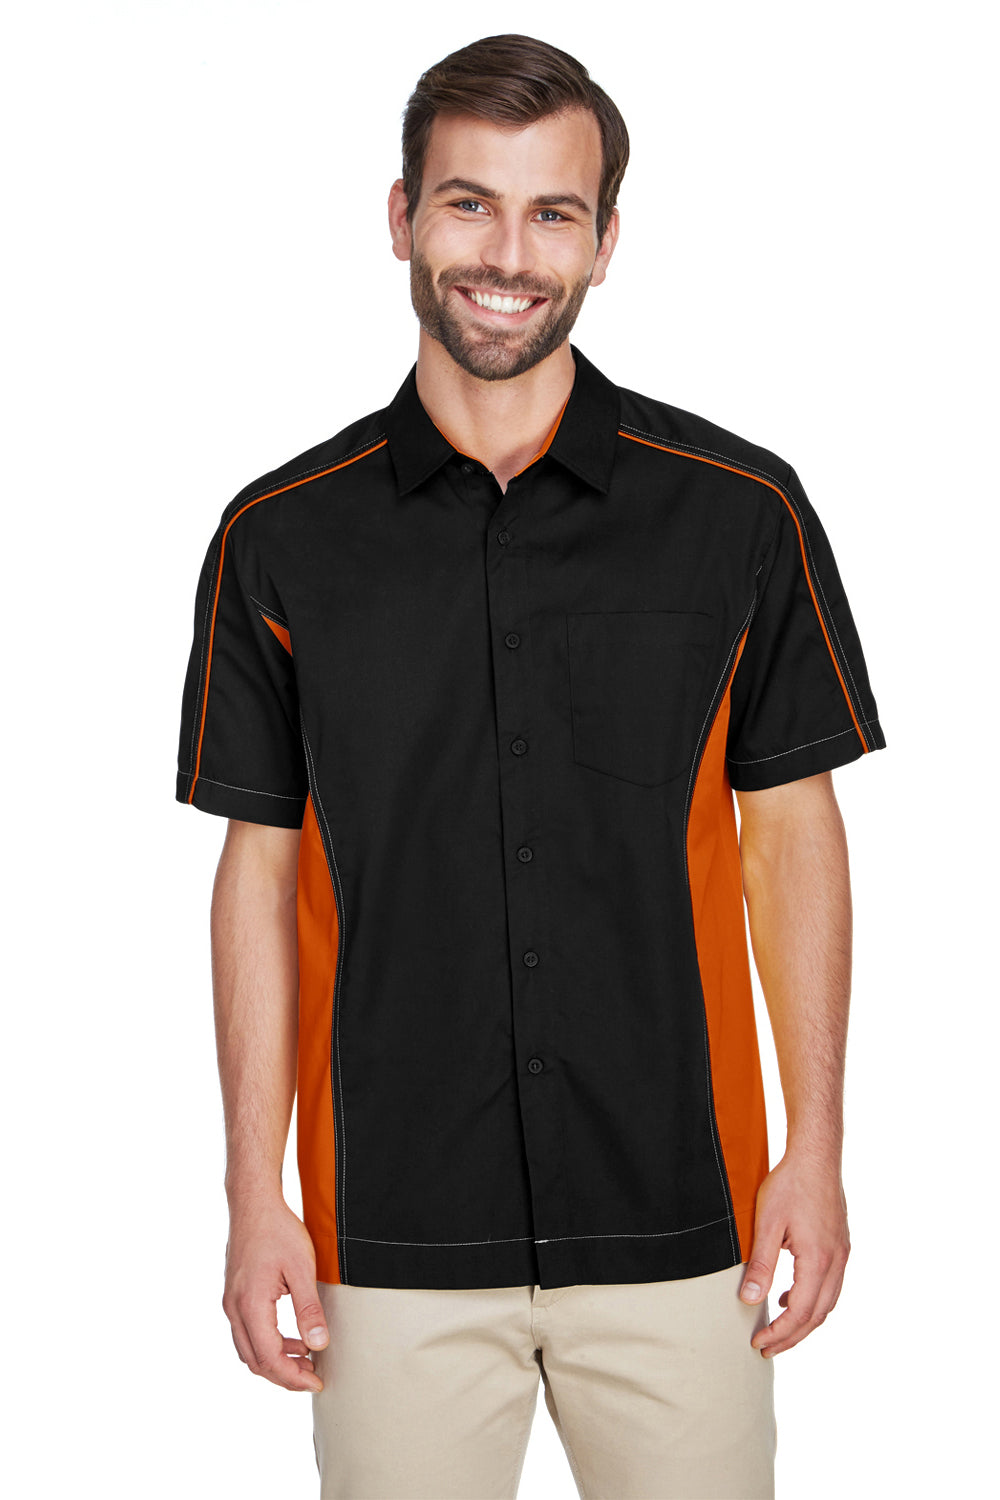 North End 87042 Mens Fuse Short Sleeve Button Down Shirt w/ Pocket Black/Orange Front